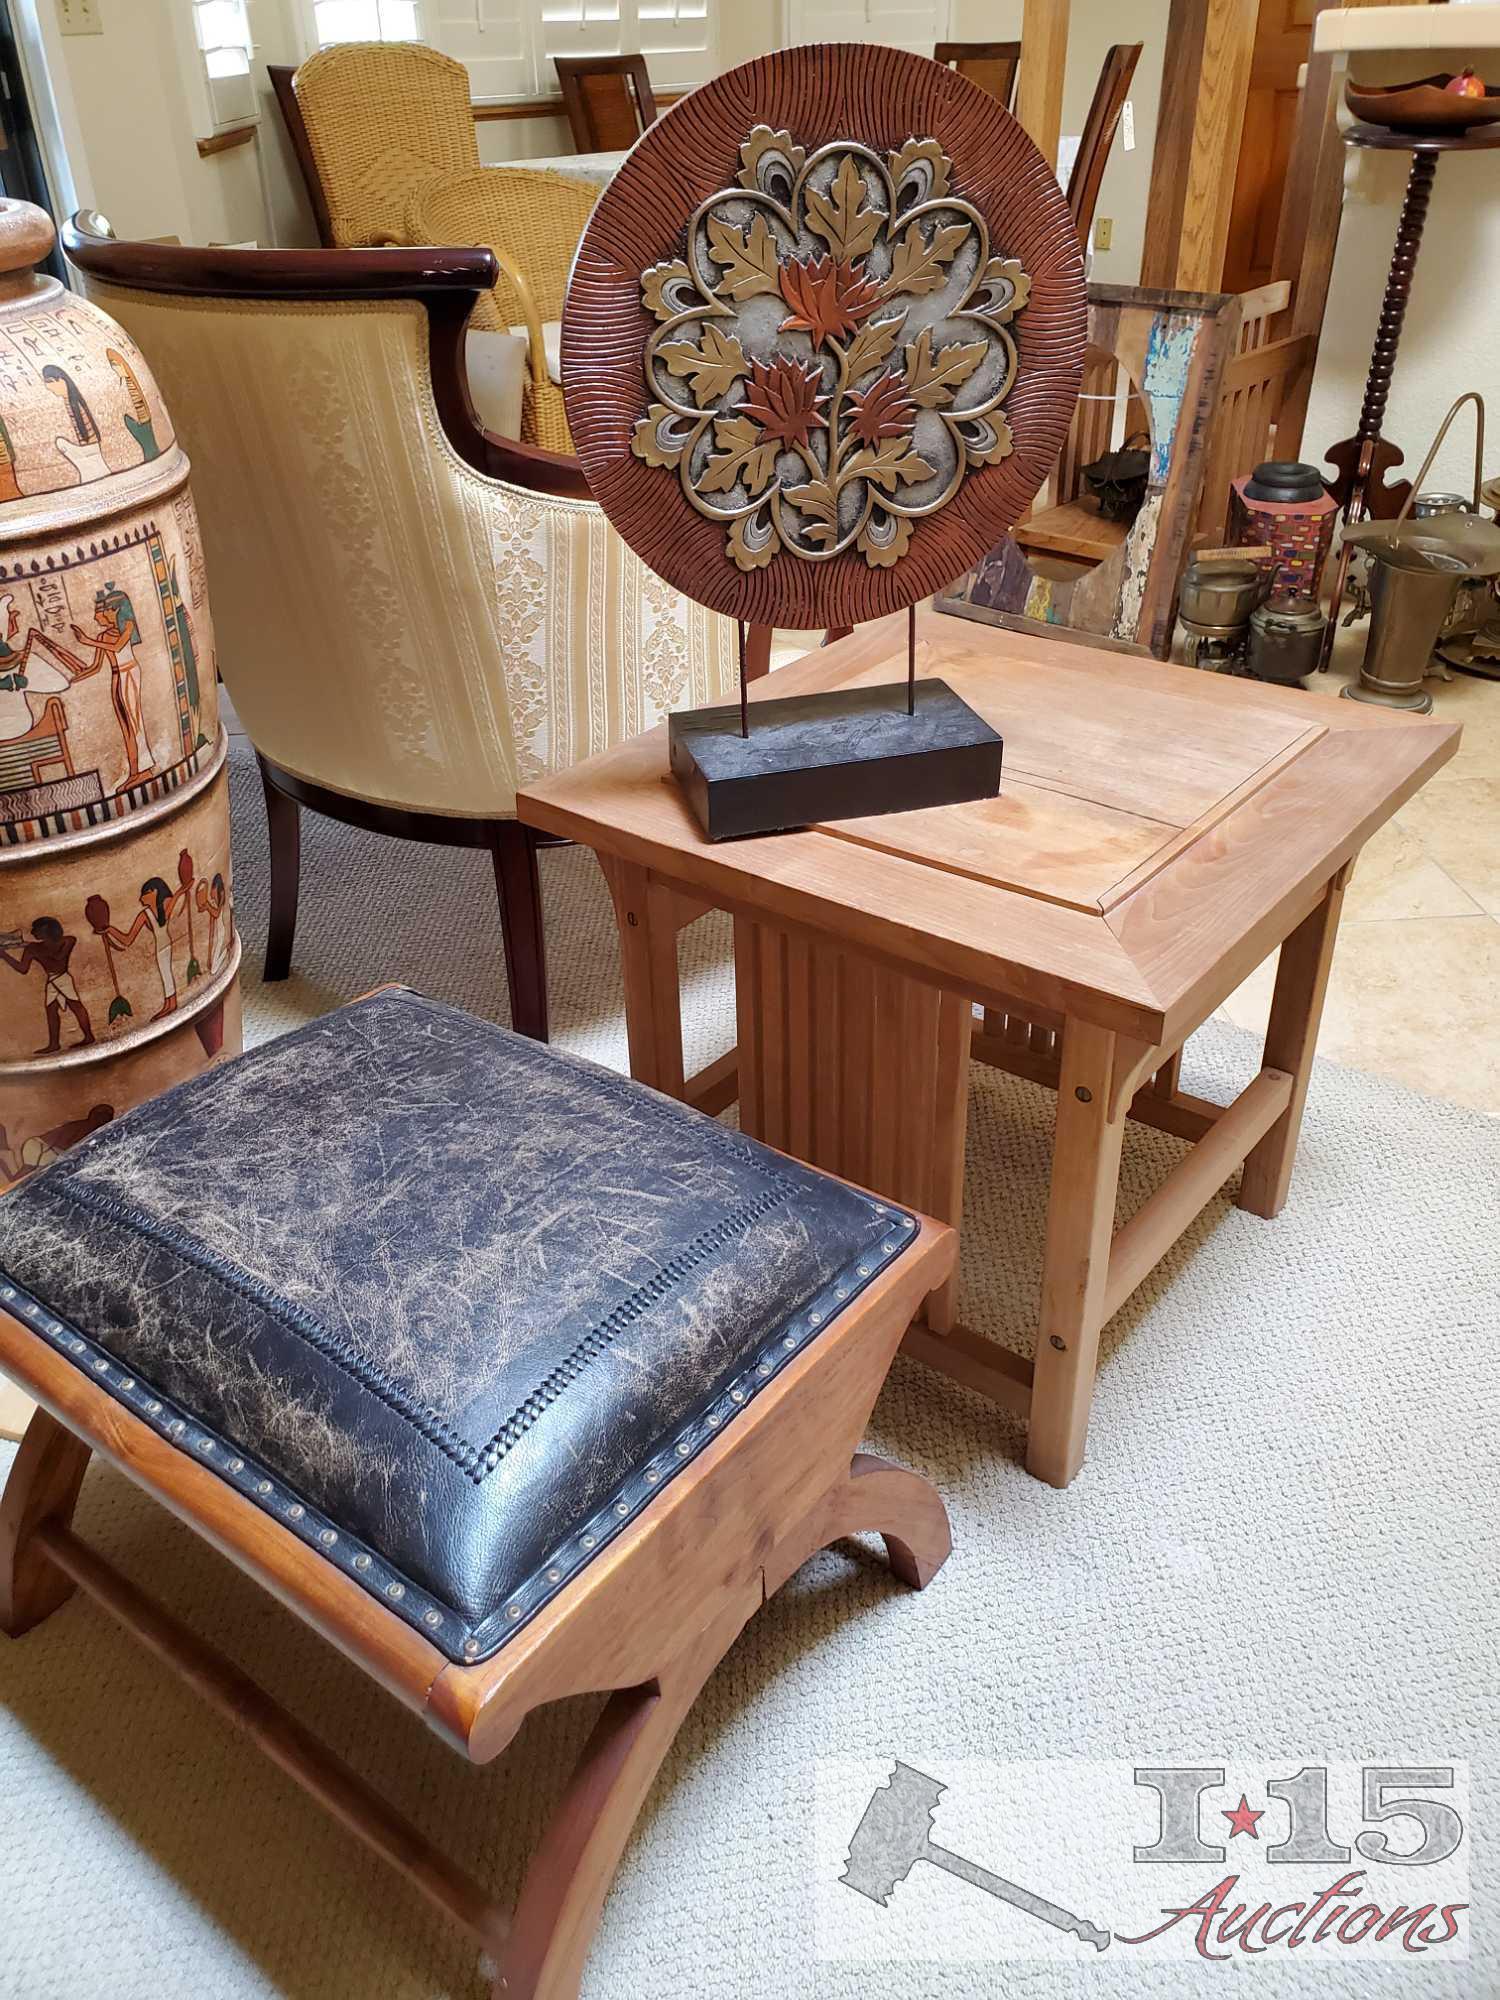 Small Ottoman, Teak sidea Table and Table Top Decoration